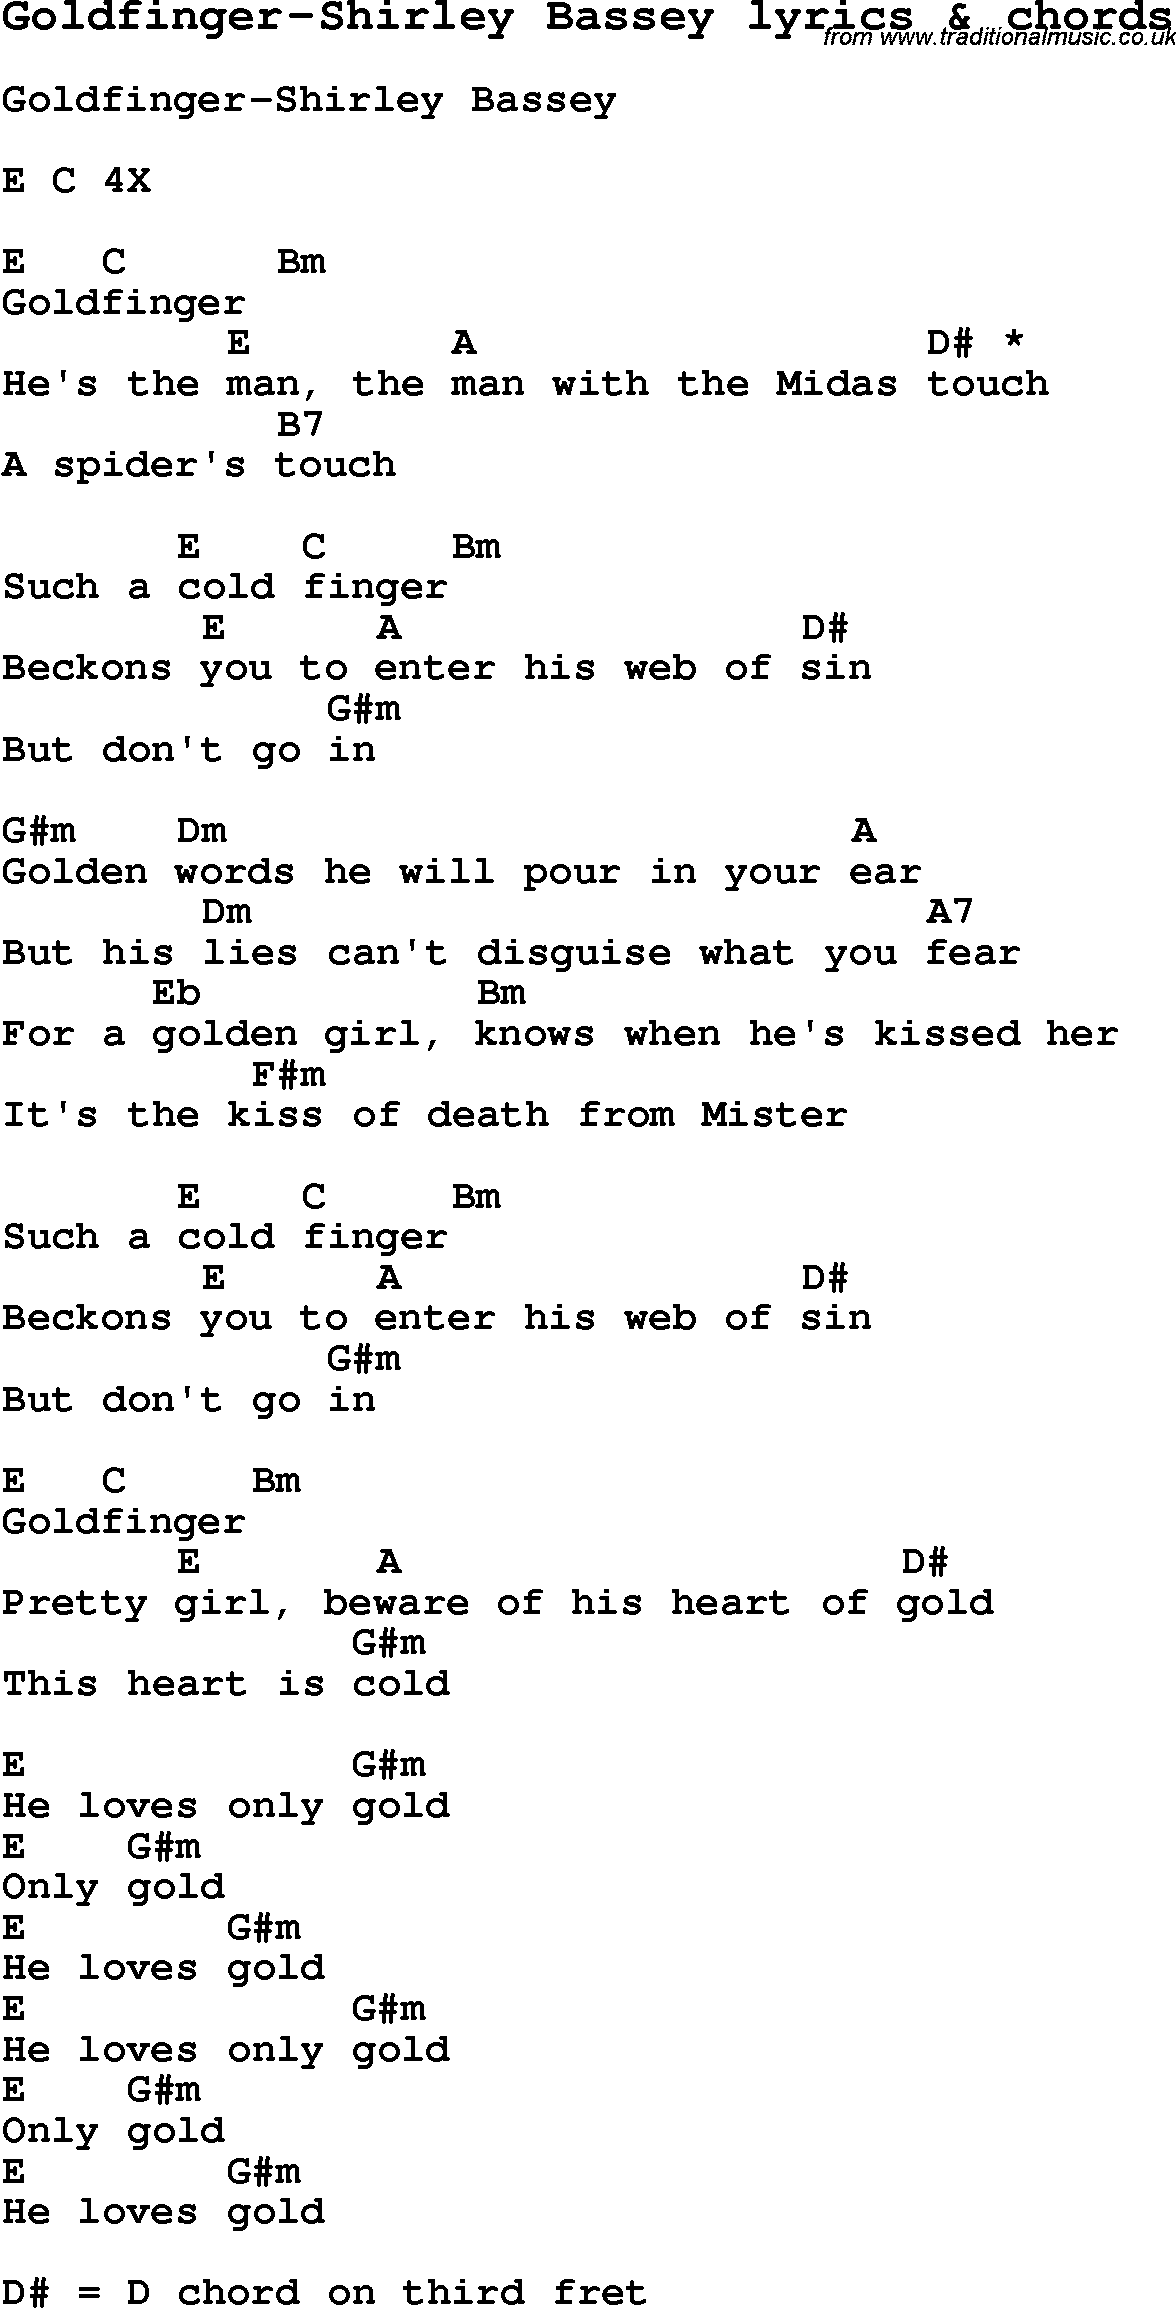 Love Song Lyrics for: Goldfinger-Shirley Bassey with chords for Ukulele, Guitar Banjo etc.